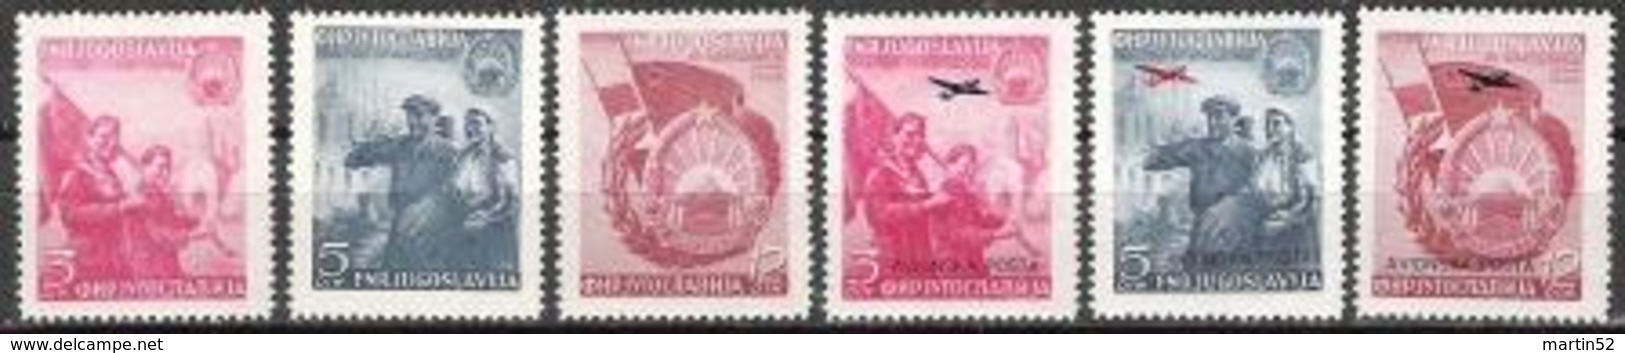 Jugoslavija 1949: Federated Republic Of Macedonia Michel-No. 573-577 AVIONSKA POSTA ** MNH  (Michel 45.00 Euro) - Airmail